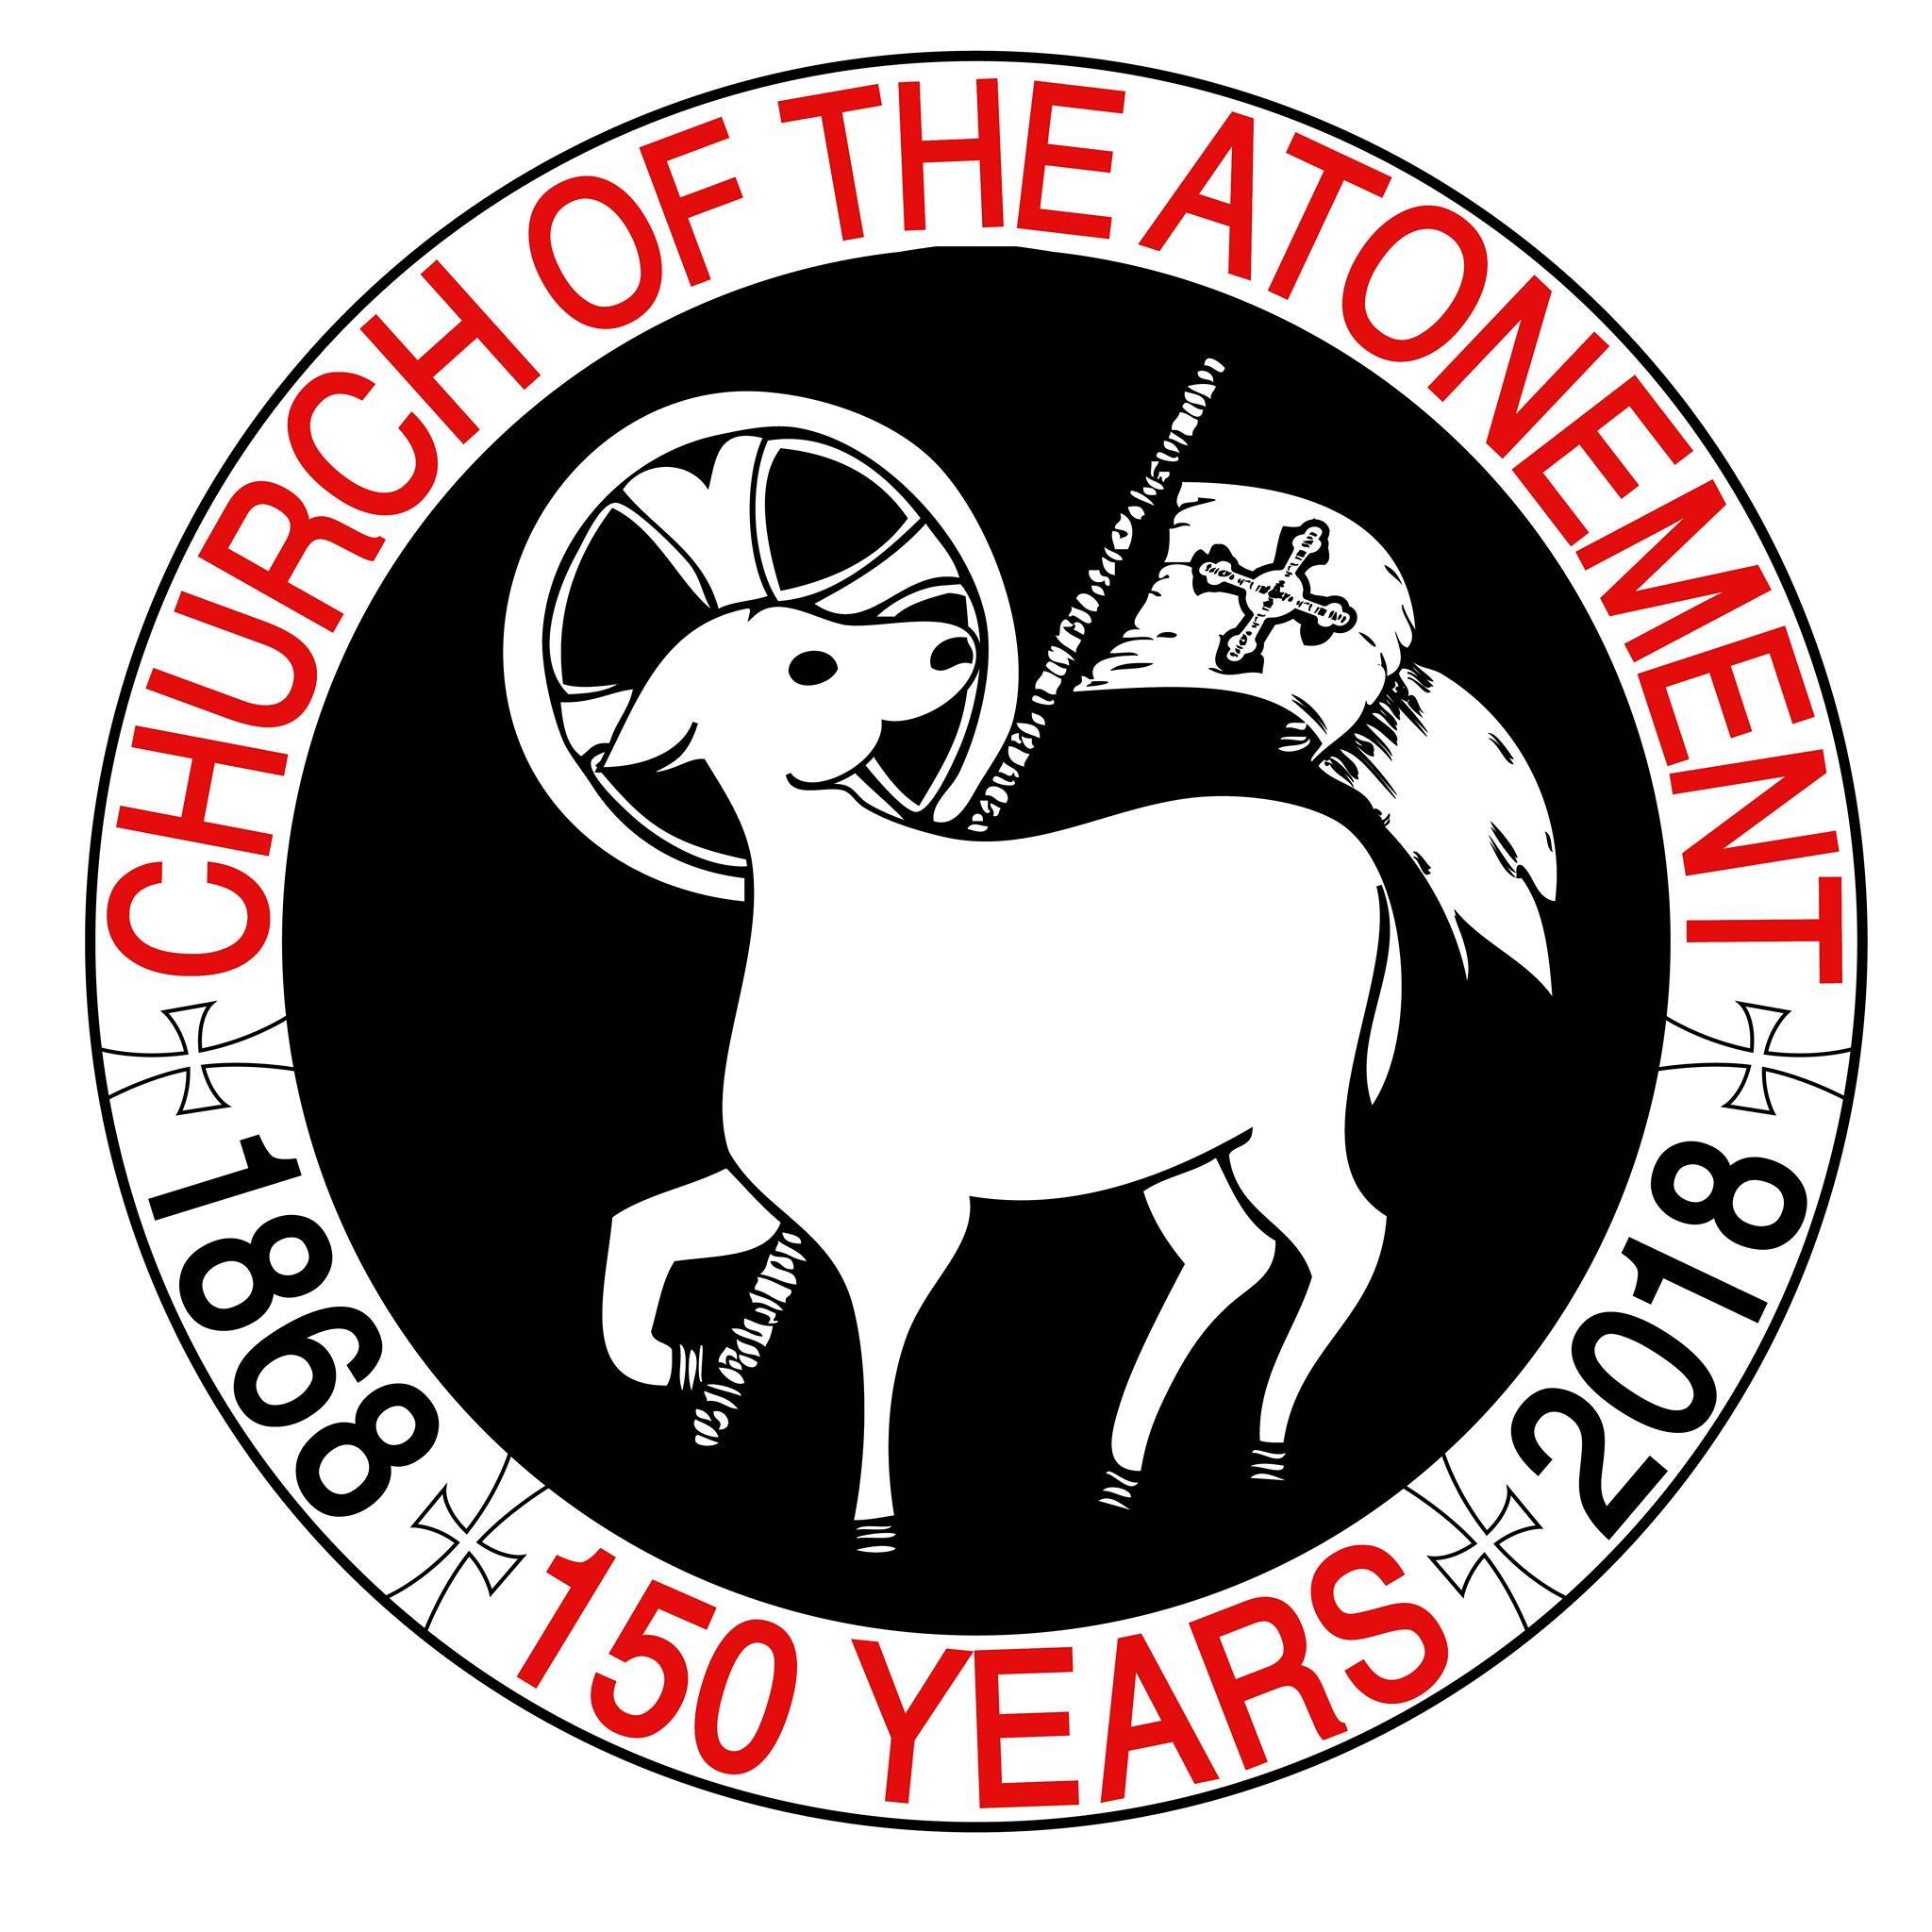 Church of the Atonement Tenafly NJ